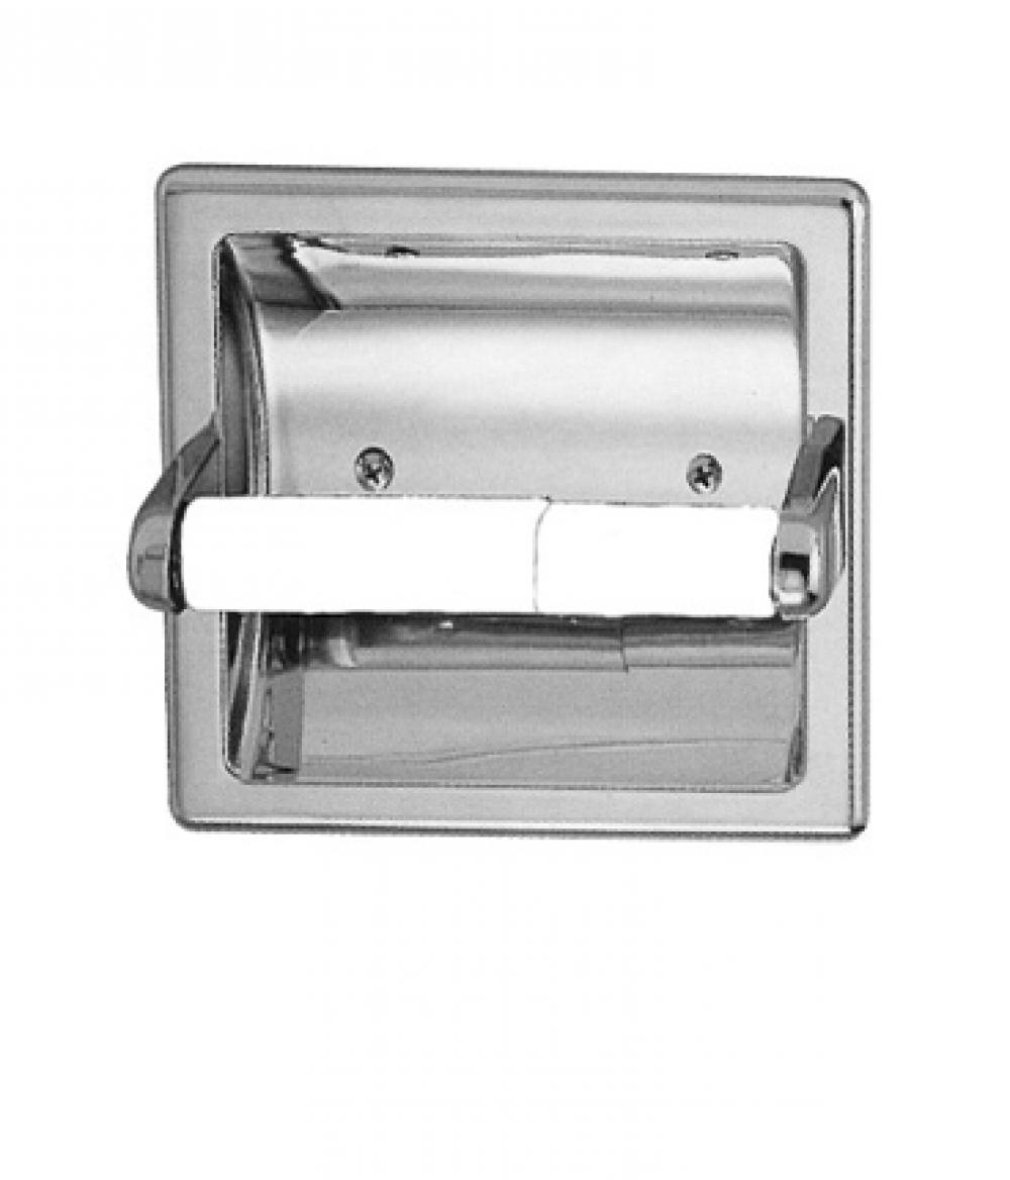 Plumbing N Parts Semi-recessed Toilet Paper Holder